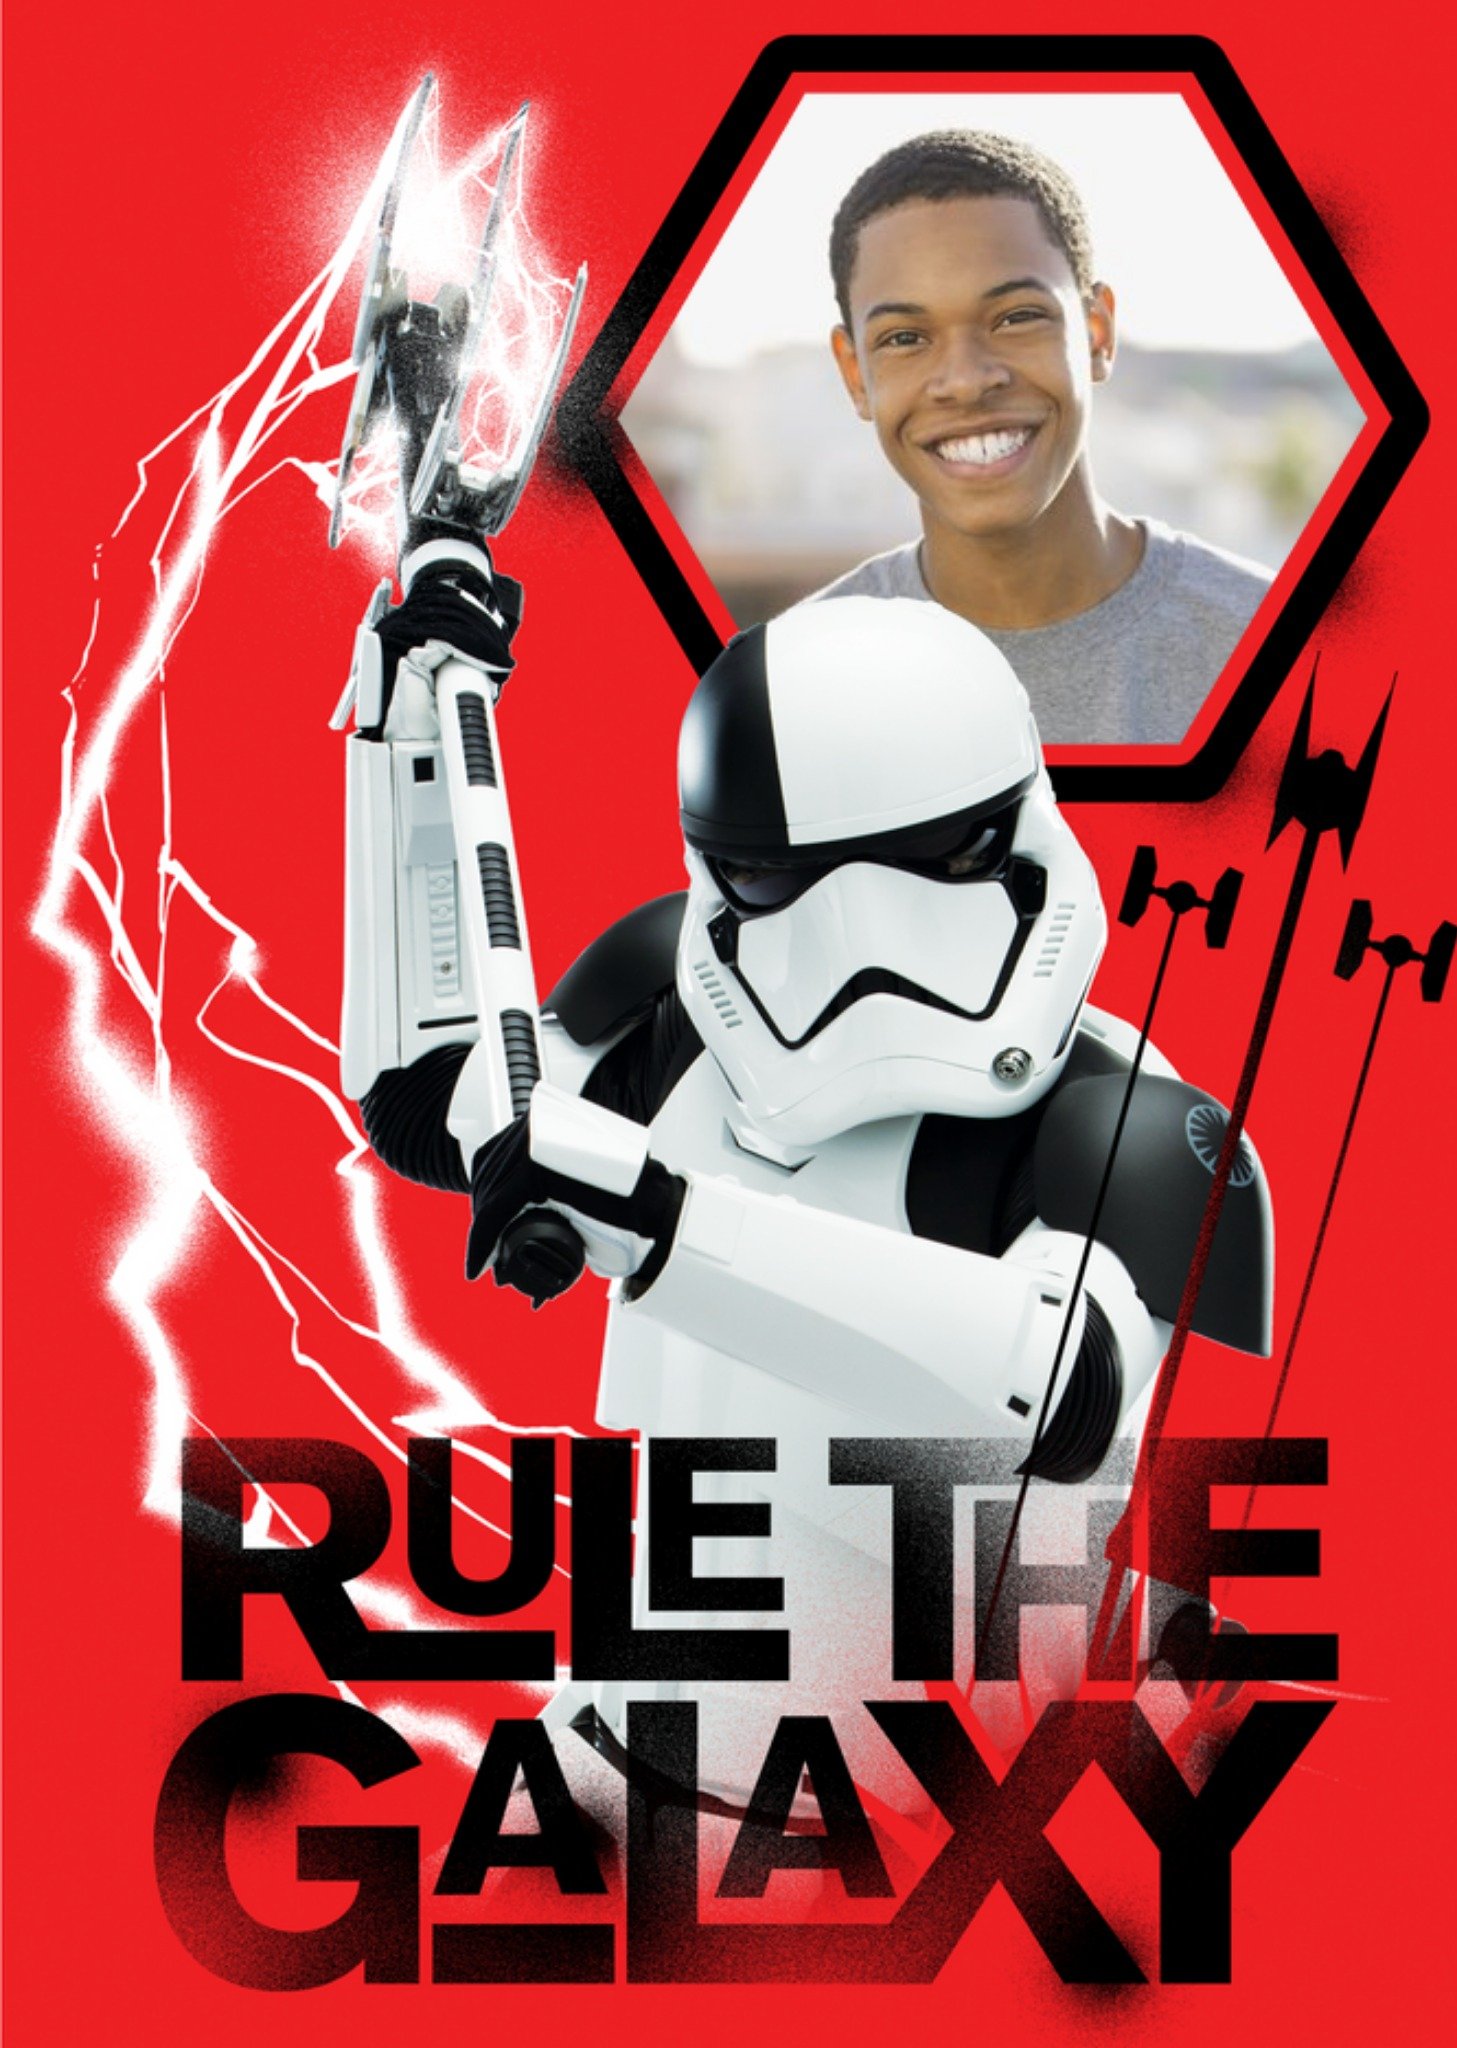 Disney Star Wars Stormtrooper Photo Upload Card Ecard